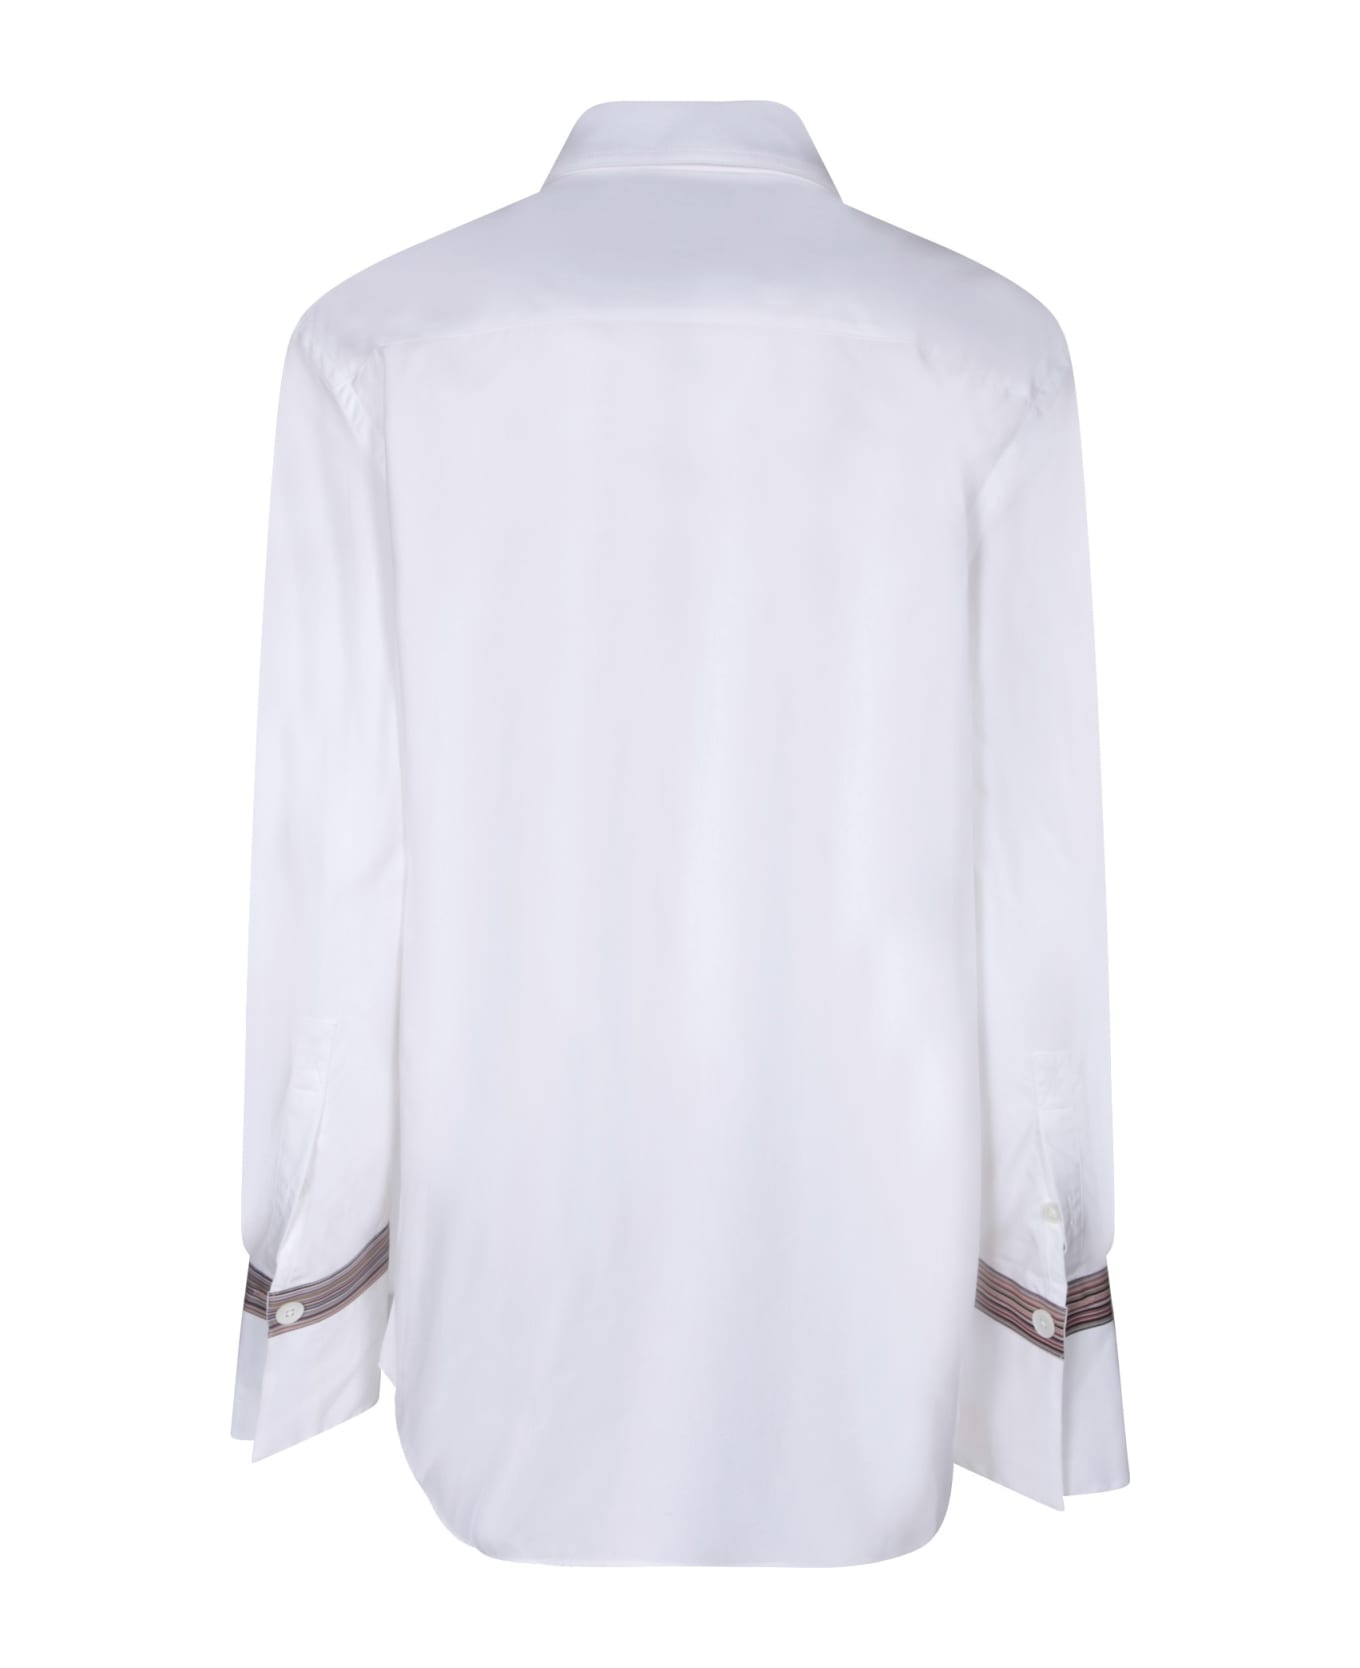 Paul Smith Popeline White Shirt - White シャツ